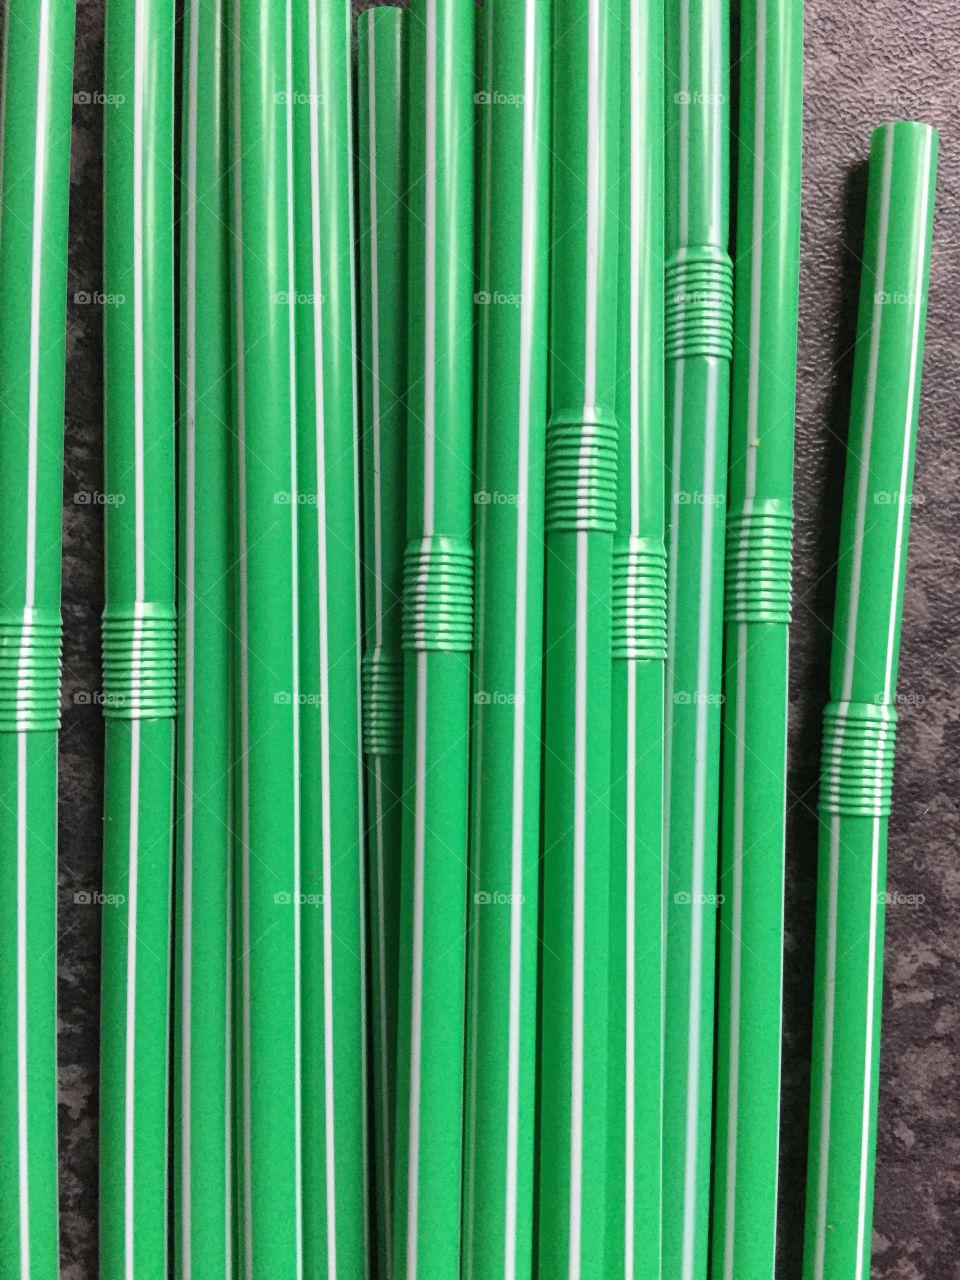 Close-up of straws